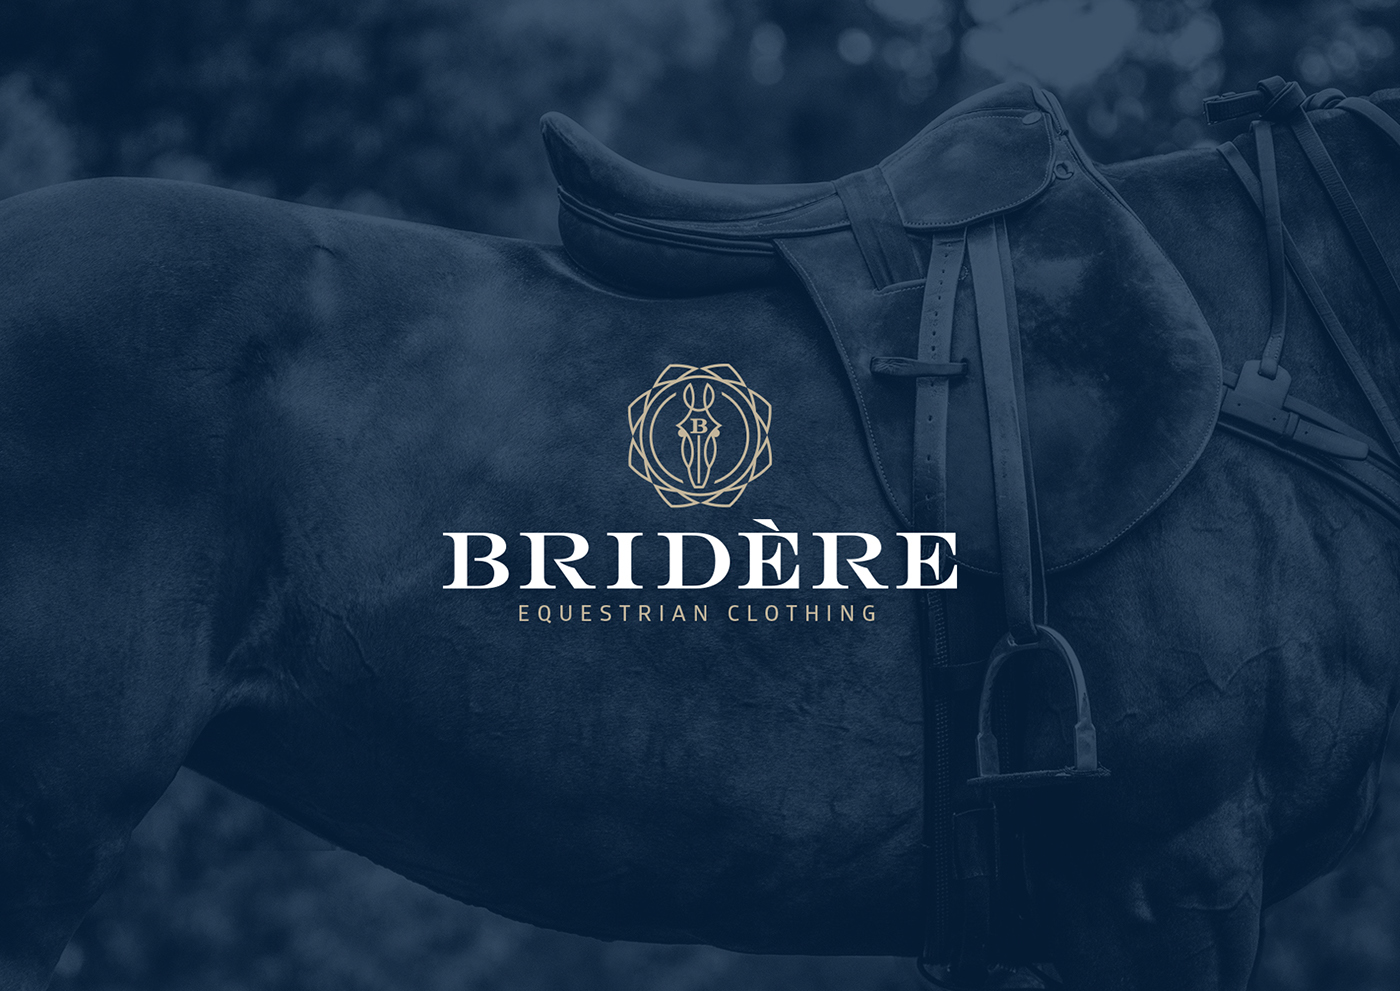 Bridere horse equestrian equestrian clothing line Clothing shop brand logo